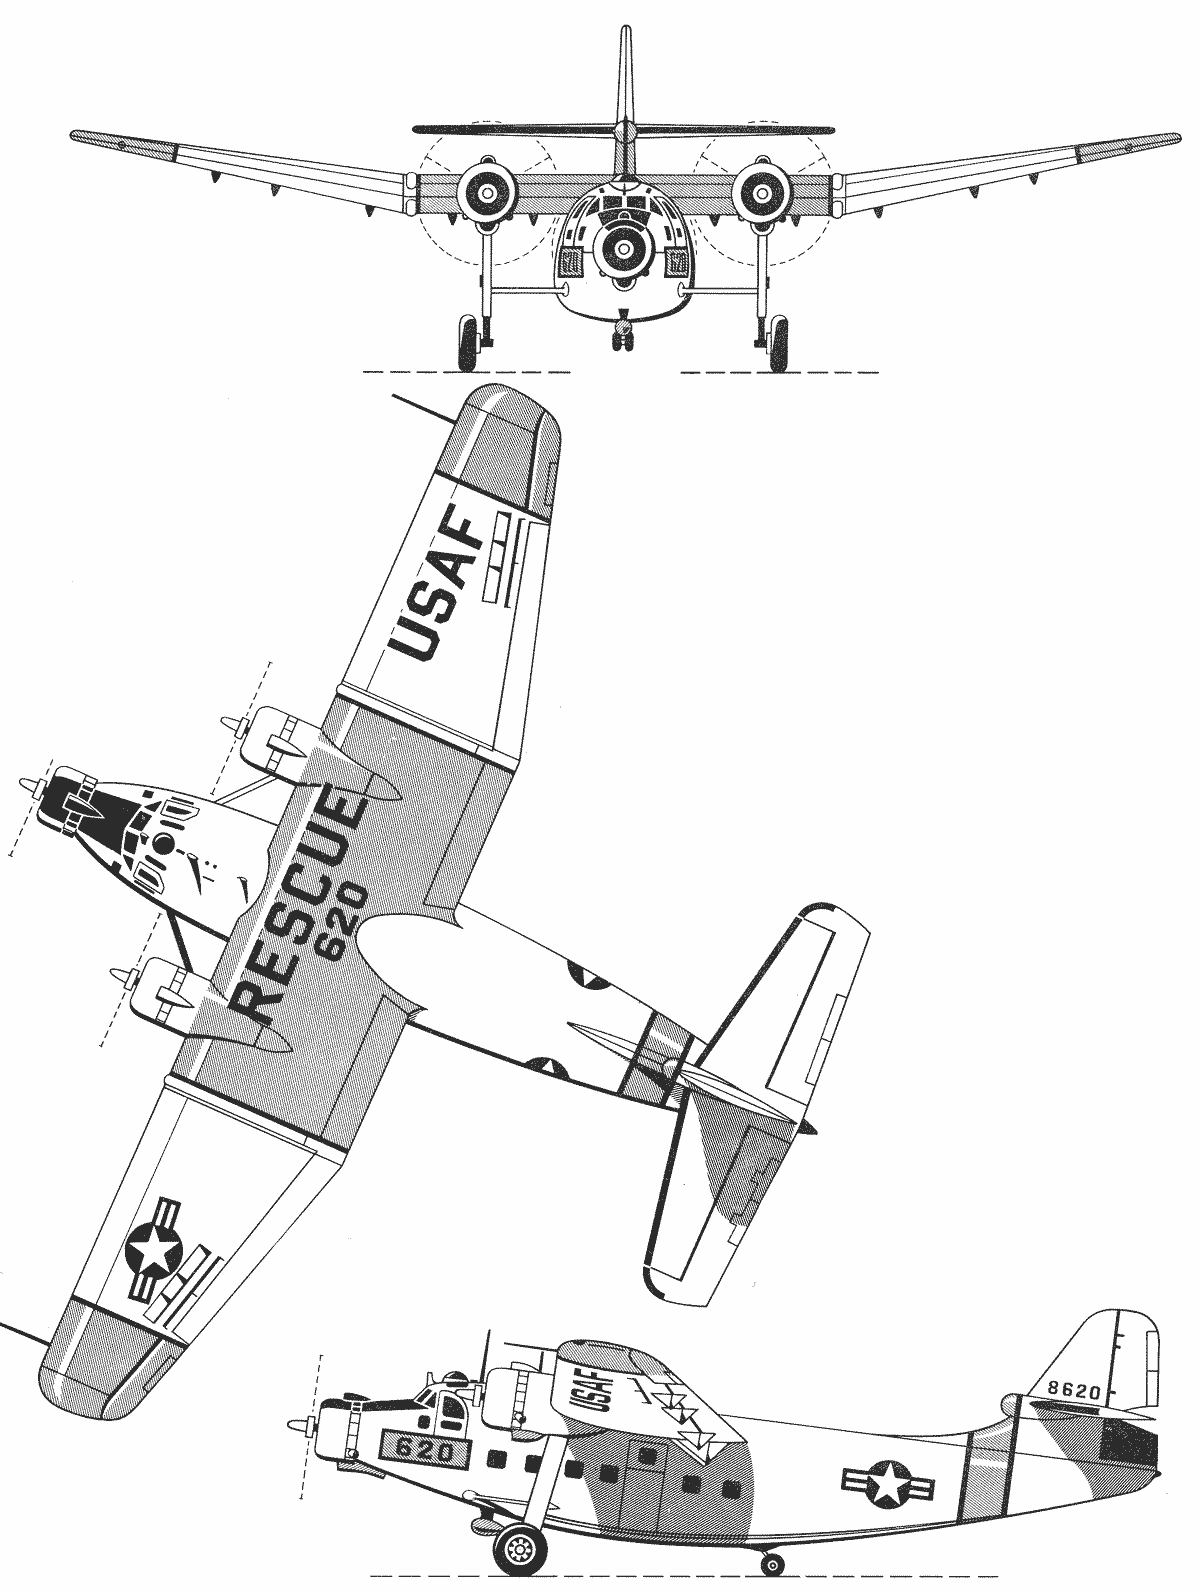 Northrop YC-125 blueprint